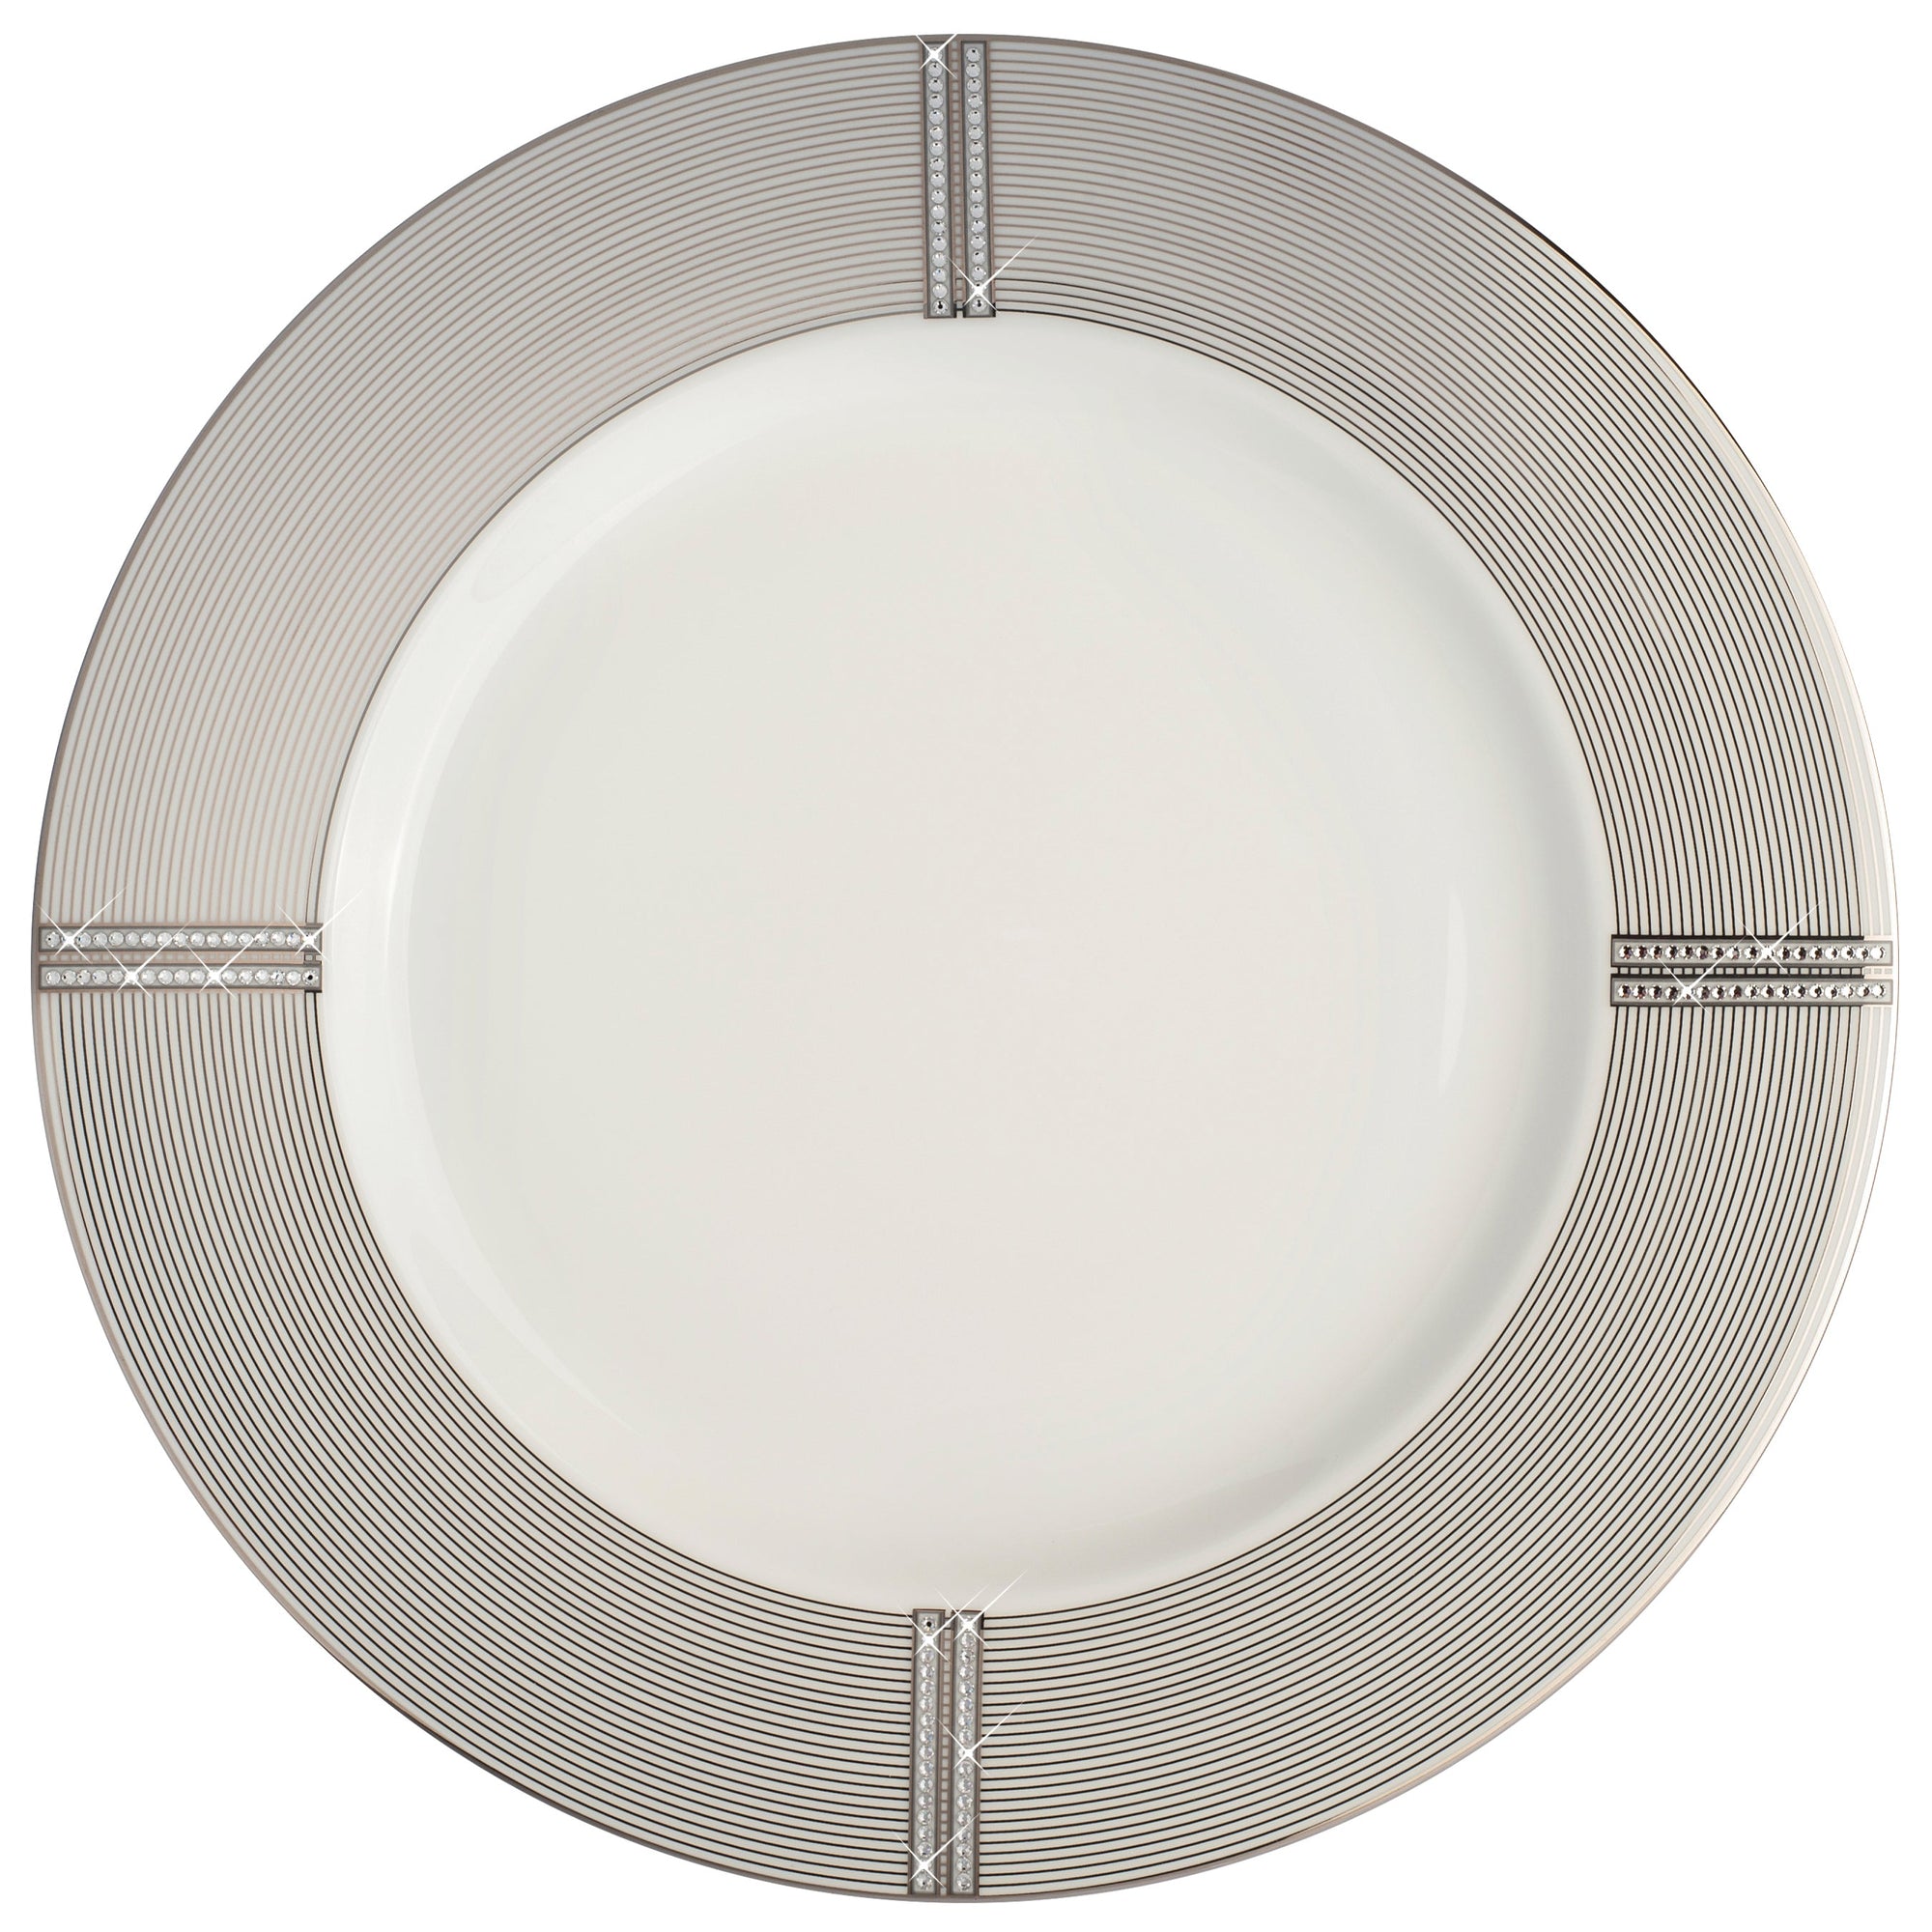 Prouna Regency Platinum Charger Plate White Background Photo